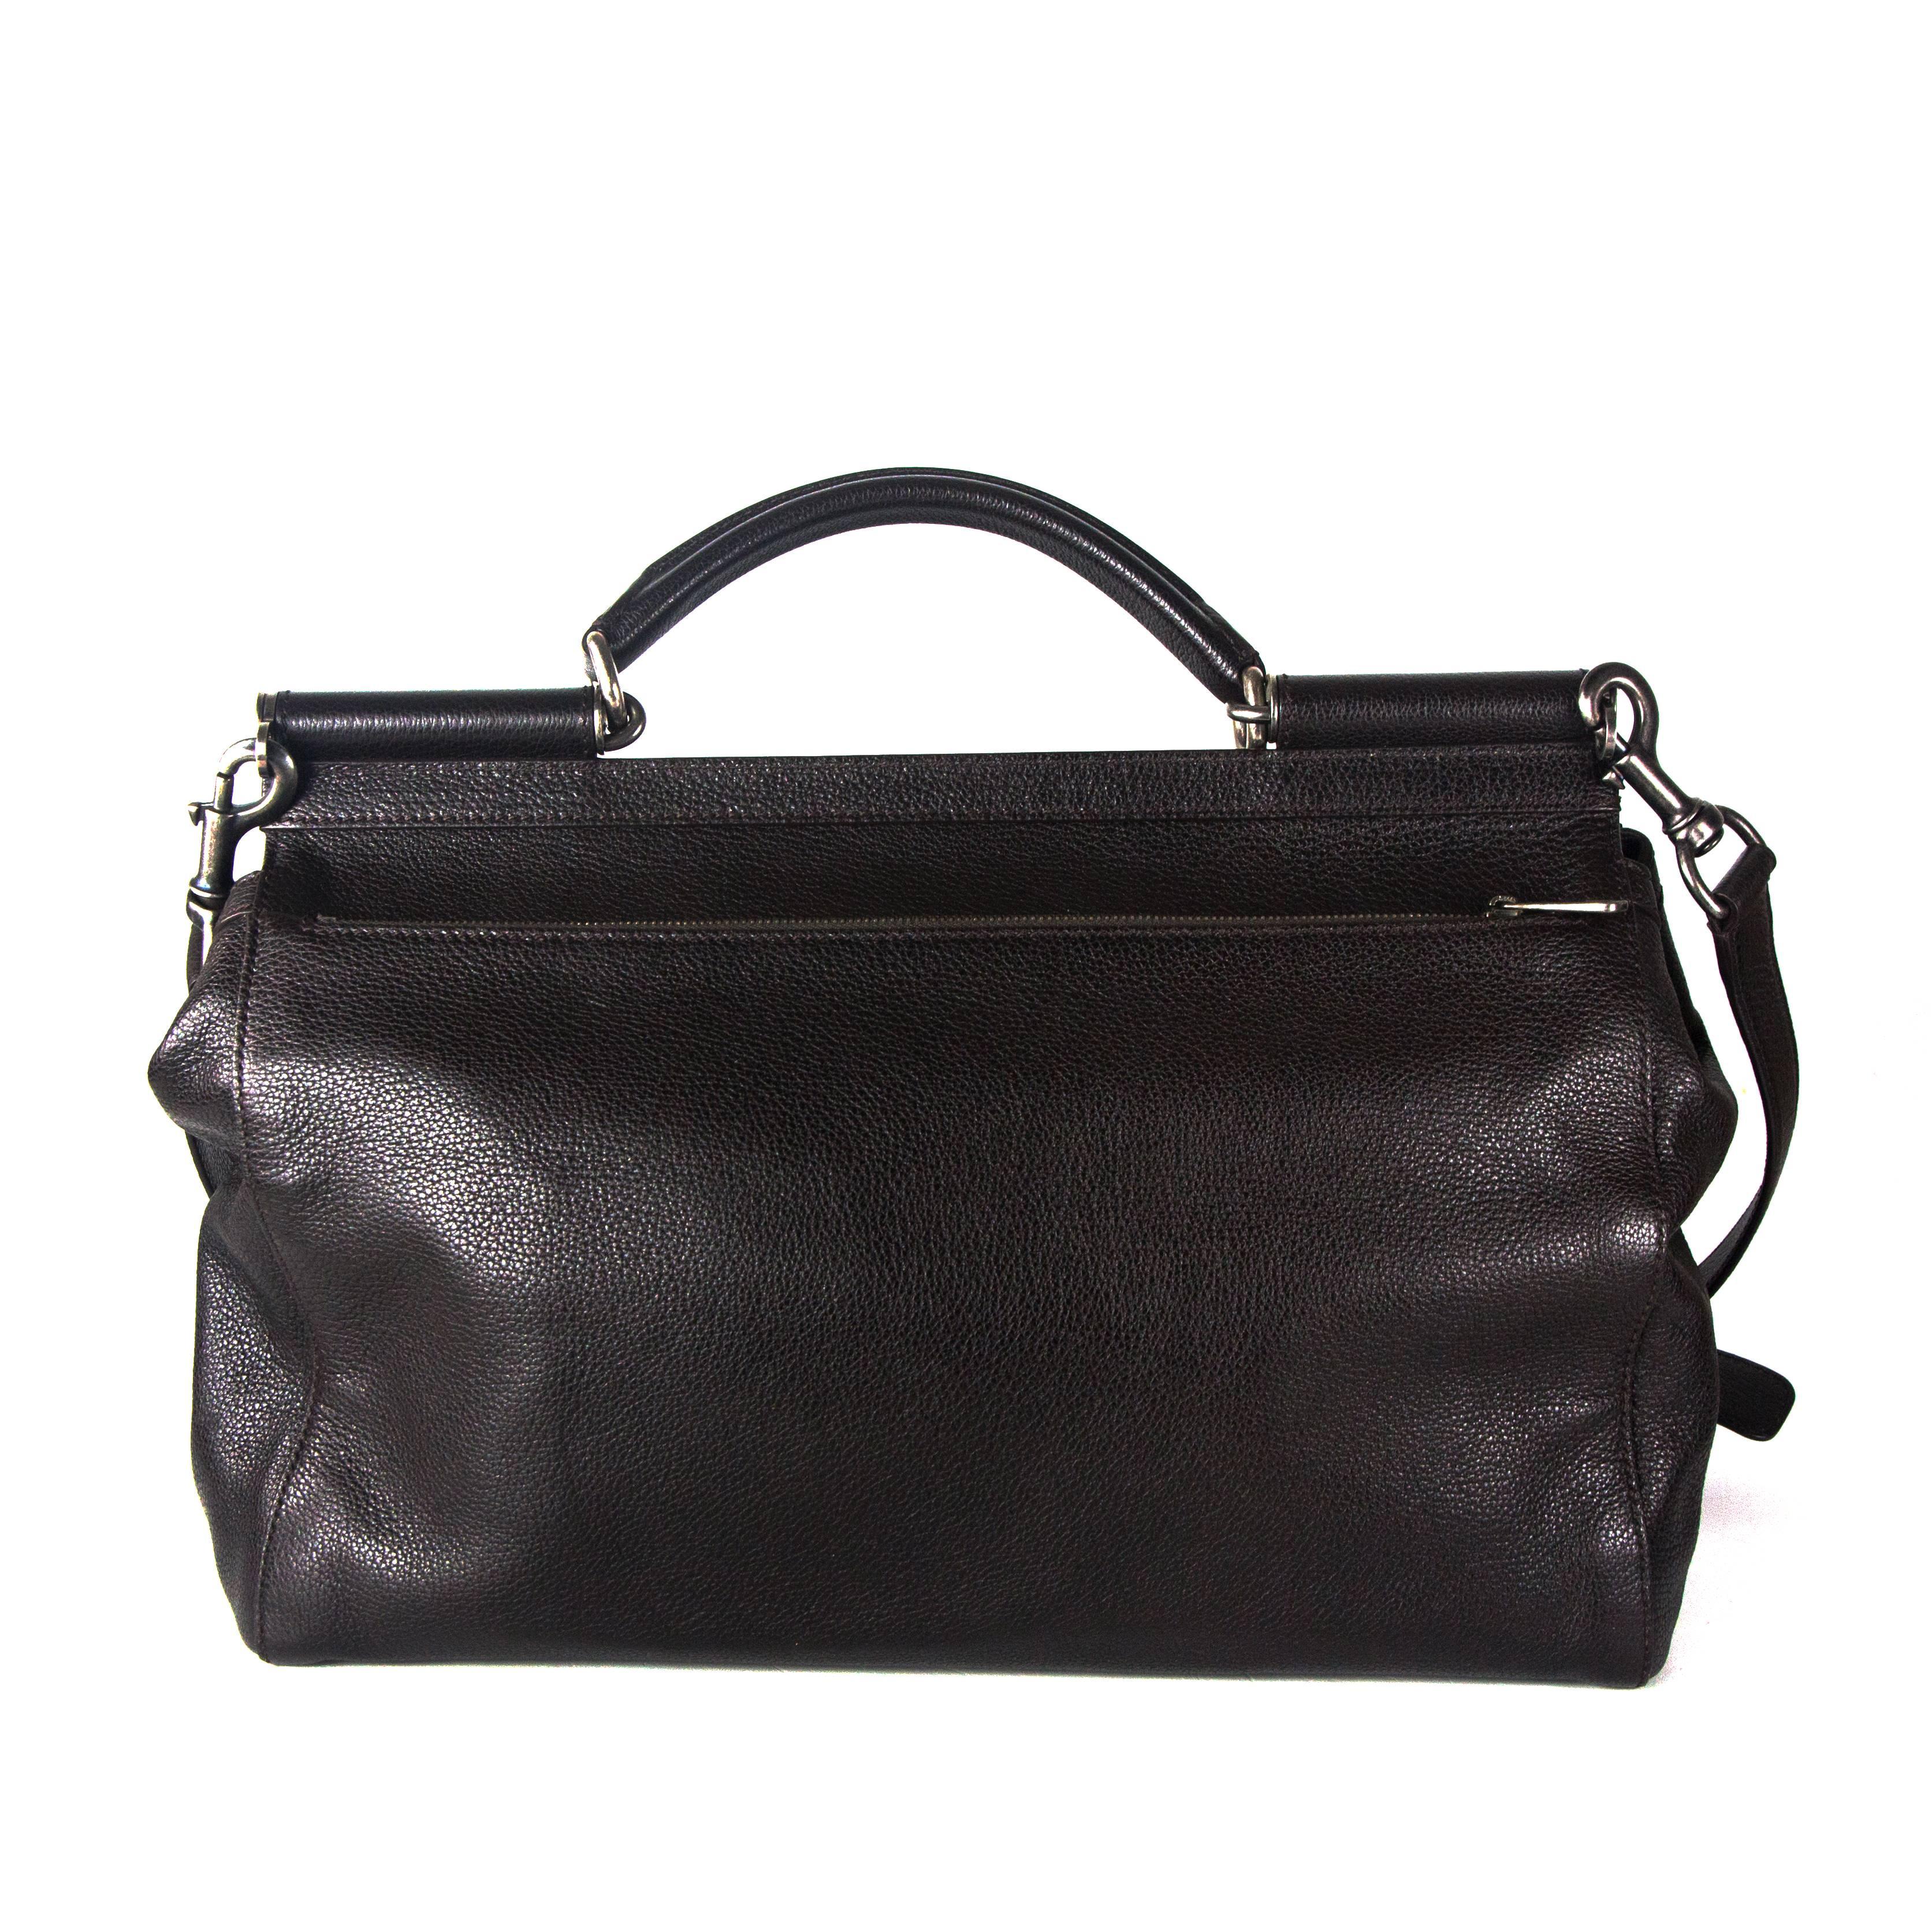 Brand New:

Dolce & Gabbana - Unisex XL Leather Messenger Briefcase Bag

Retail: $2999.00

Color: Dark Brown

Material: Leather

------------------------------------------------------------

Details:

- antiqued gunmetal hardware

- zip pocket